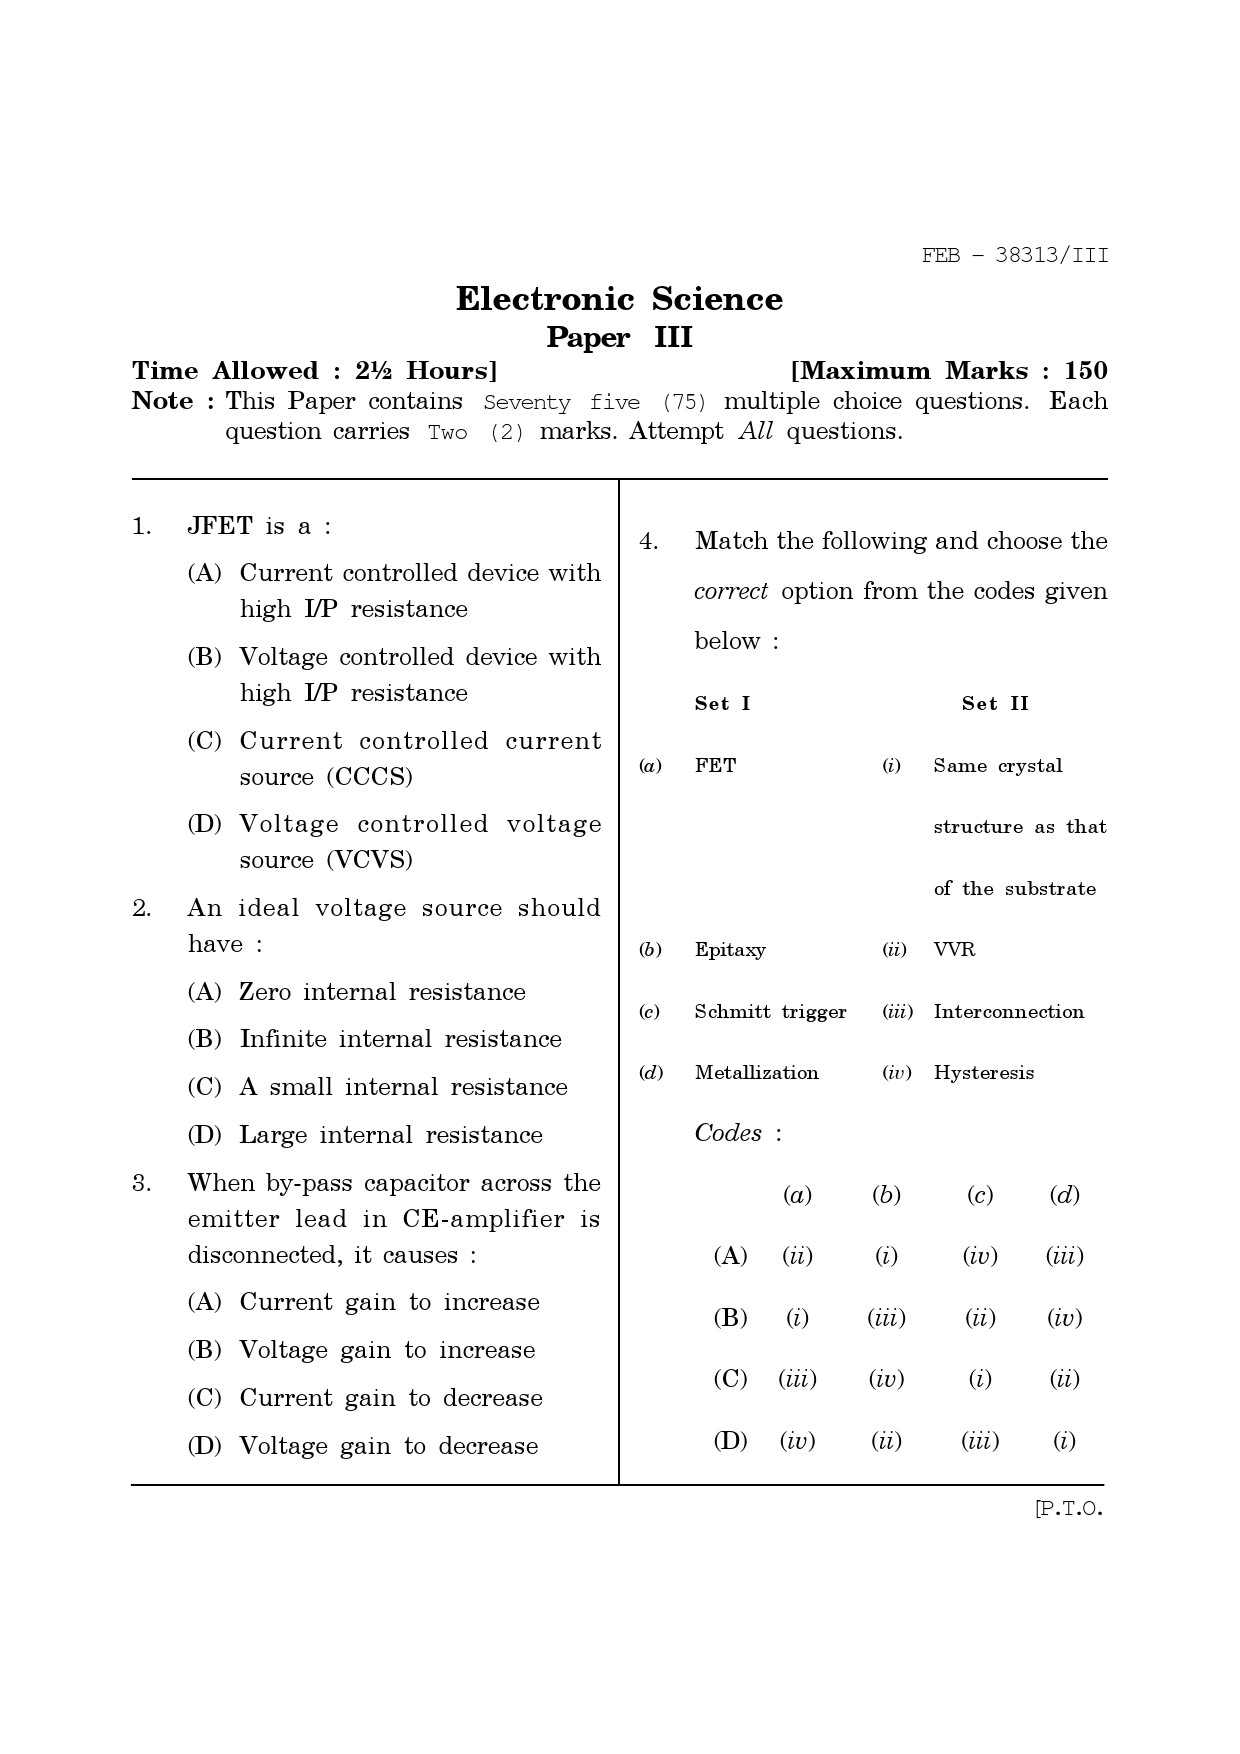 Maharashtra SET Electronics Science Question Paper III February 2013 1